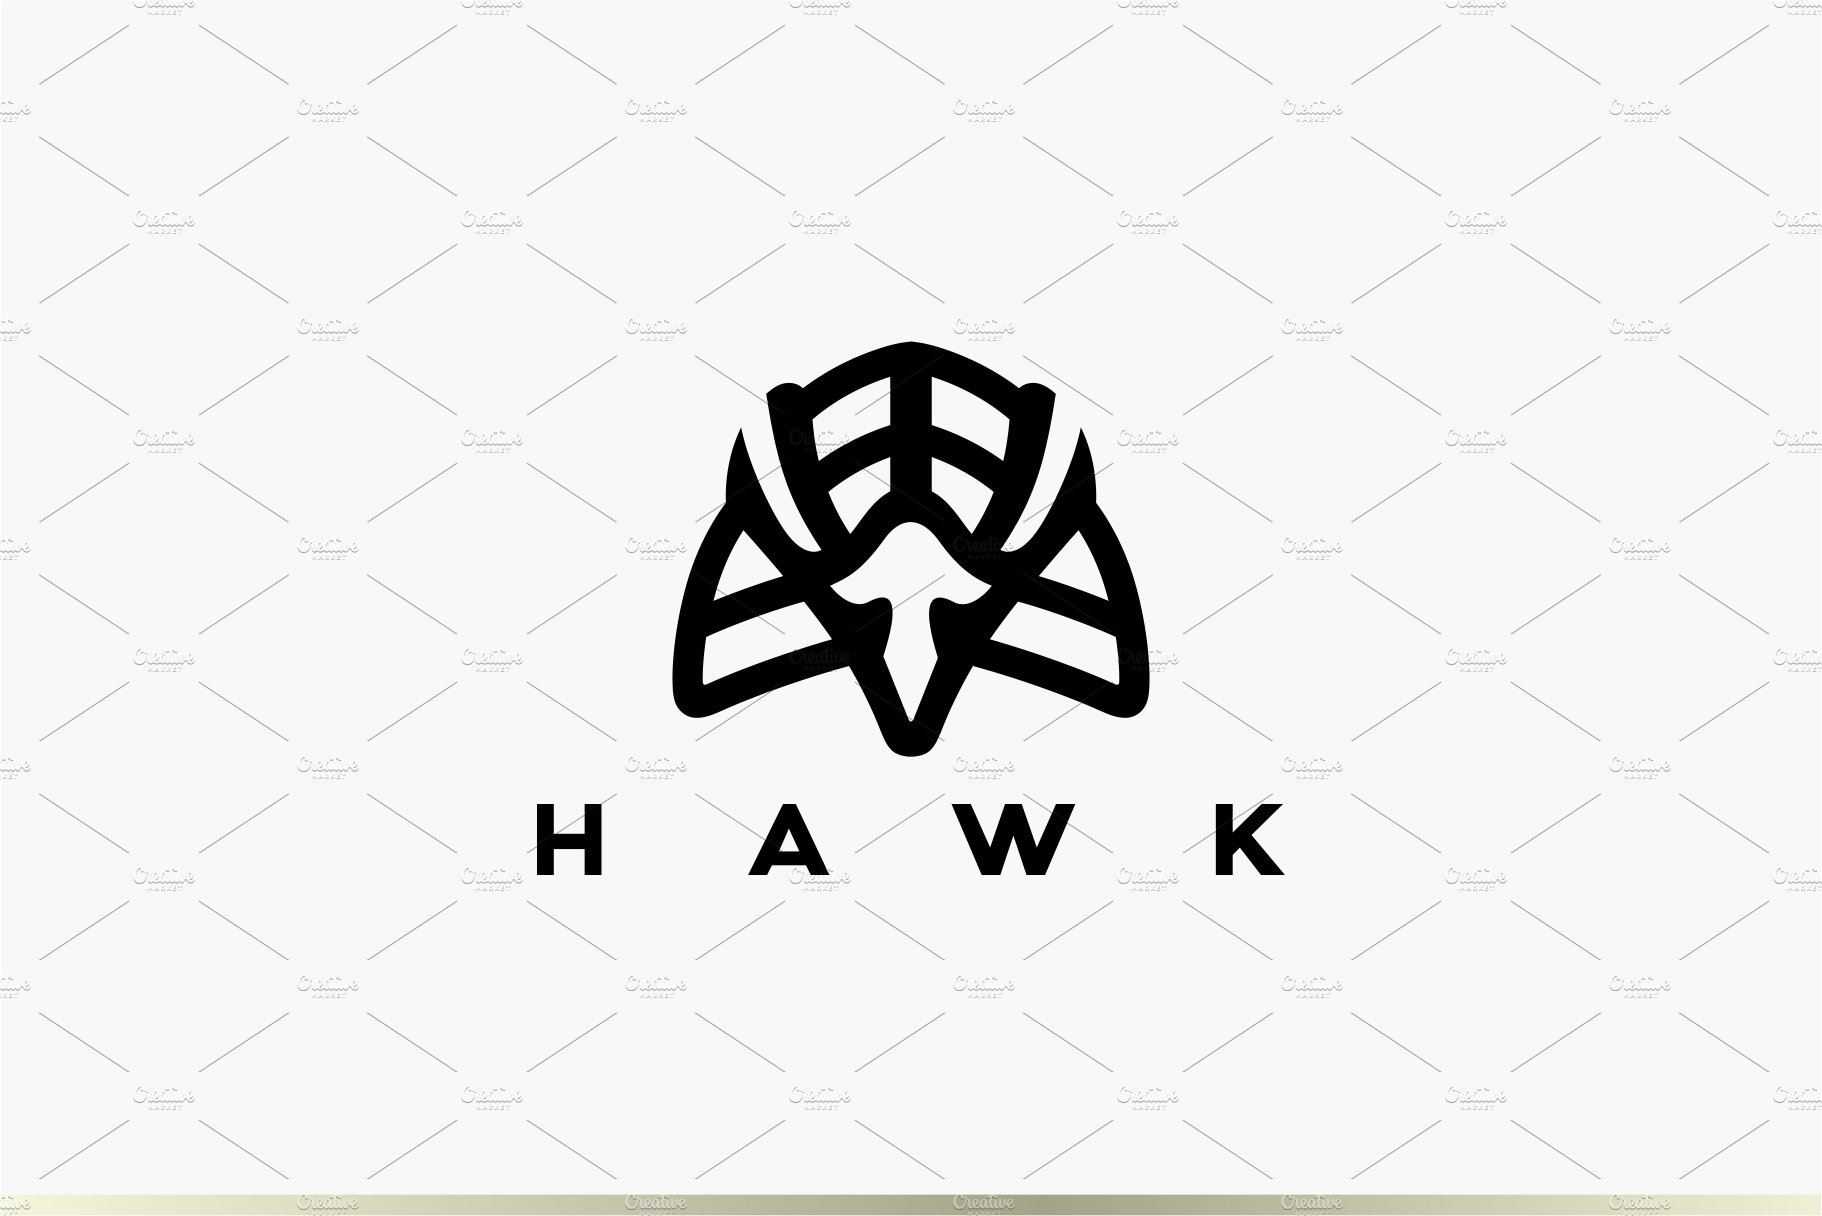 Abstract Hawk Head Logo cover image.